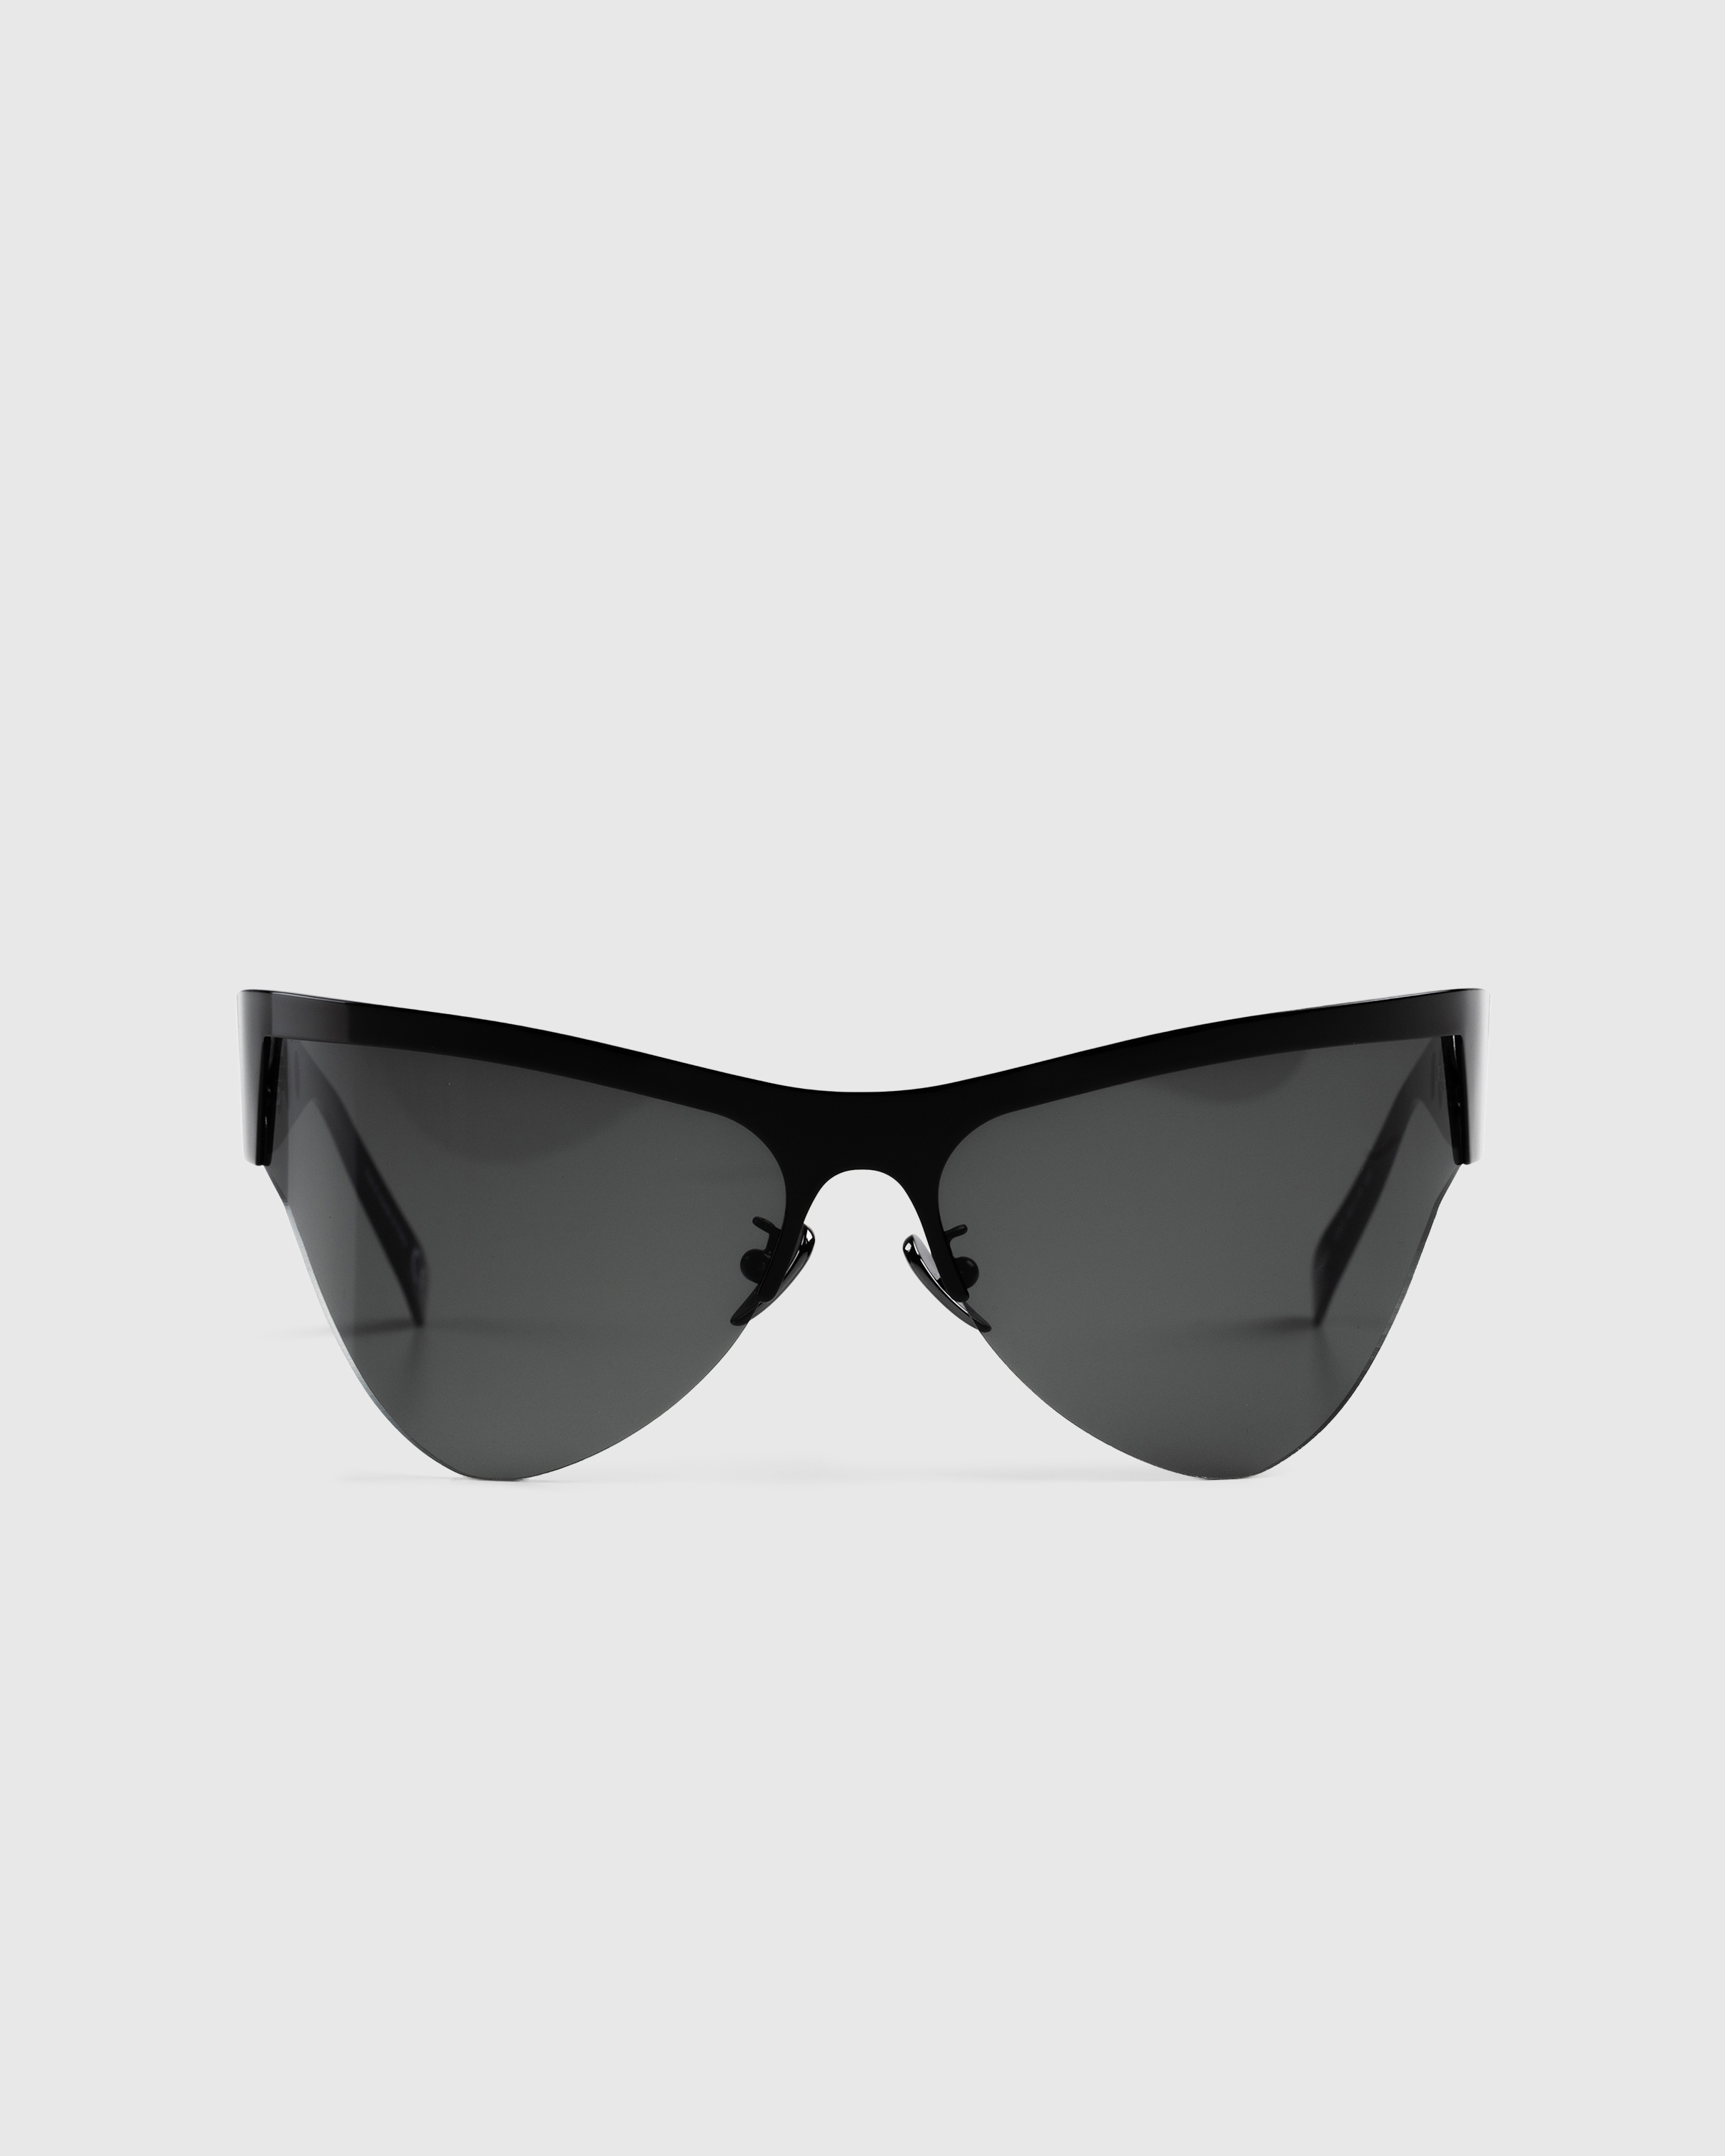 Marni x retrosuperfuture – Mauna Lola Black - Sunglasses - Black - Image 1